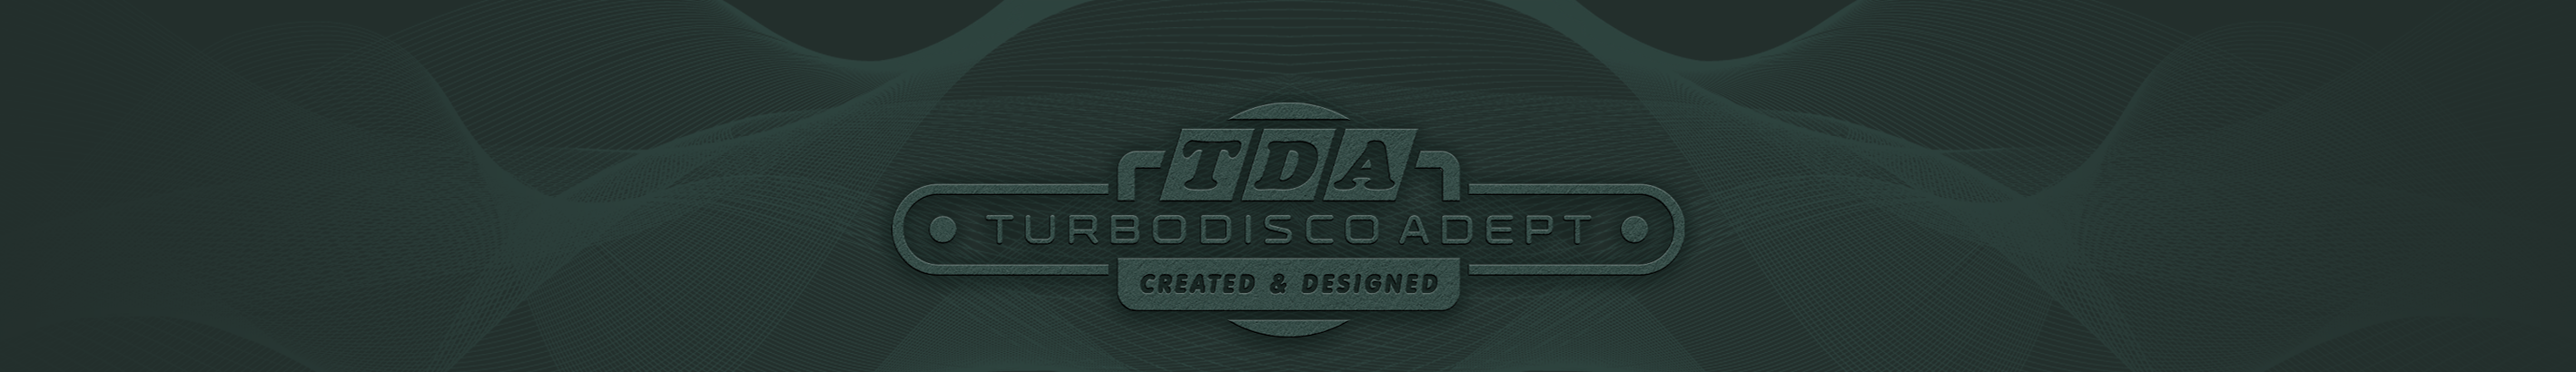 Banner de perfil de TurboDISCO Adept